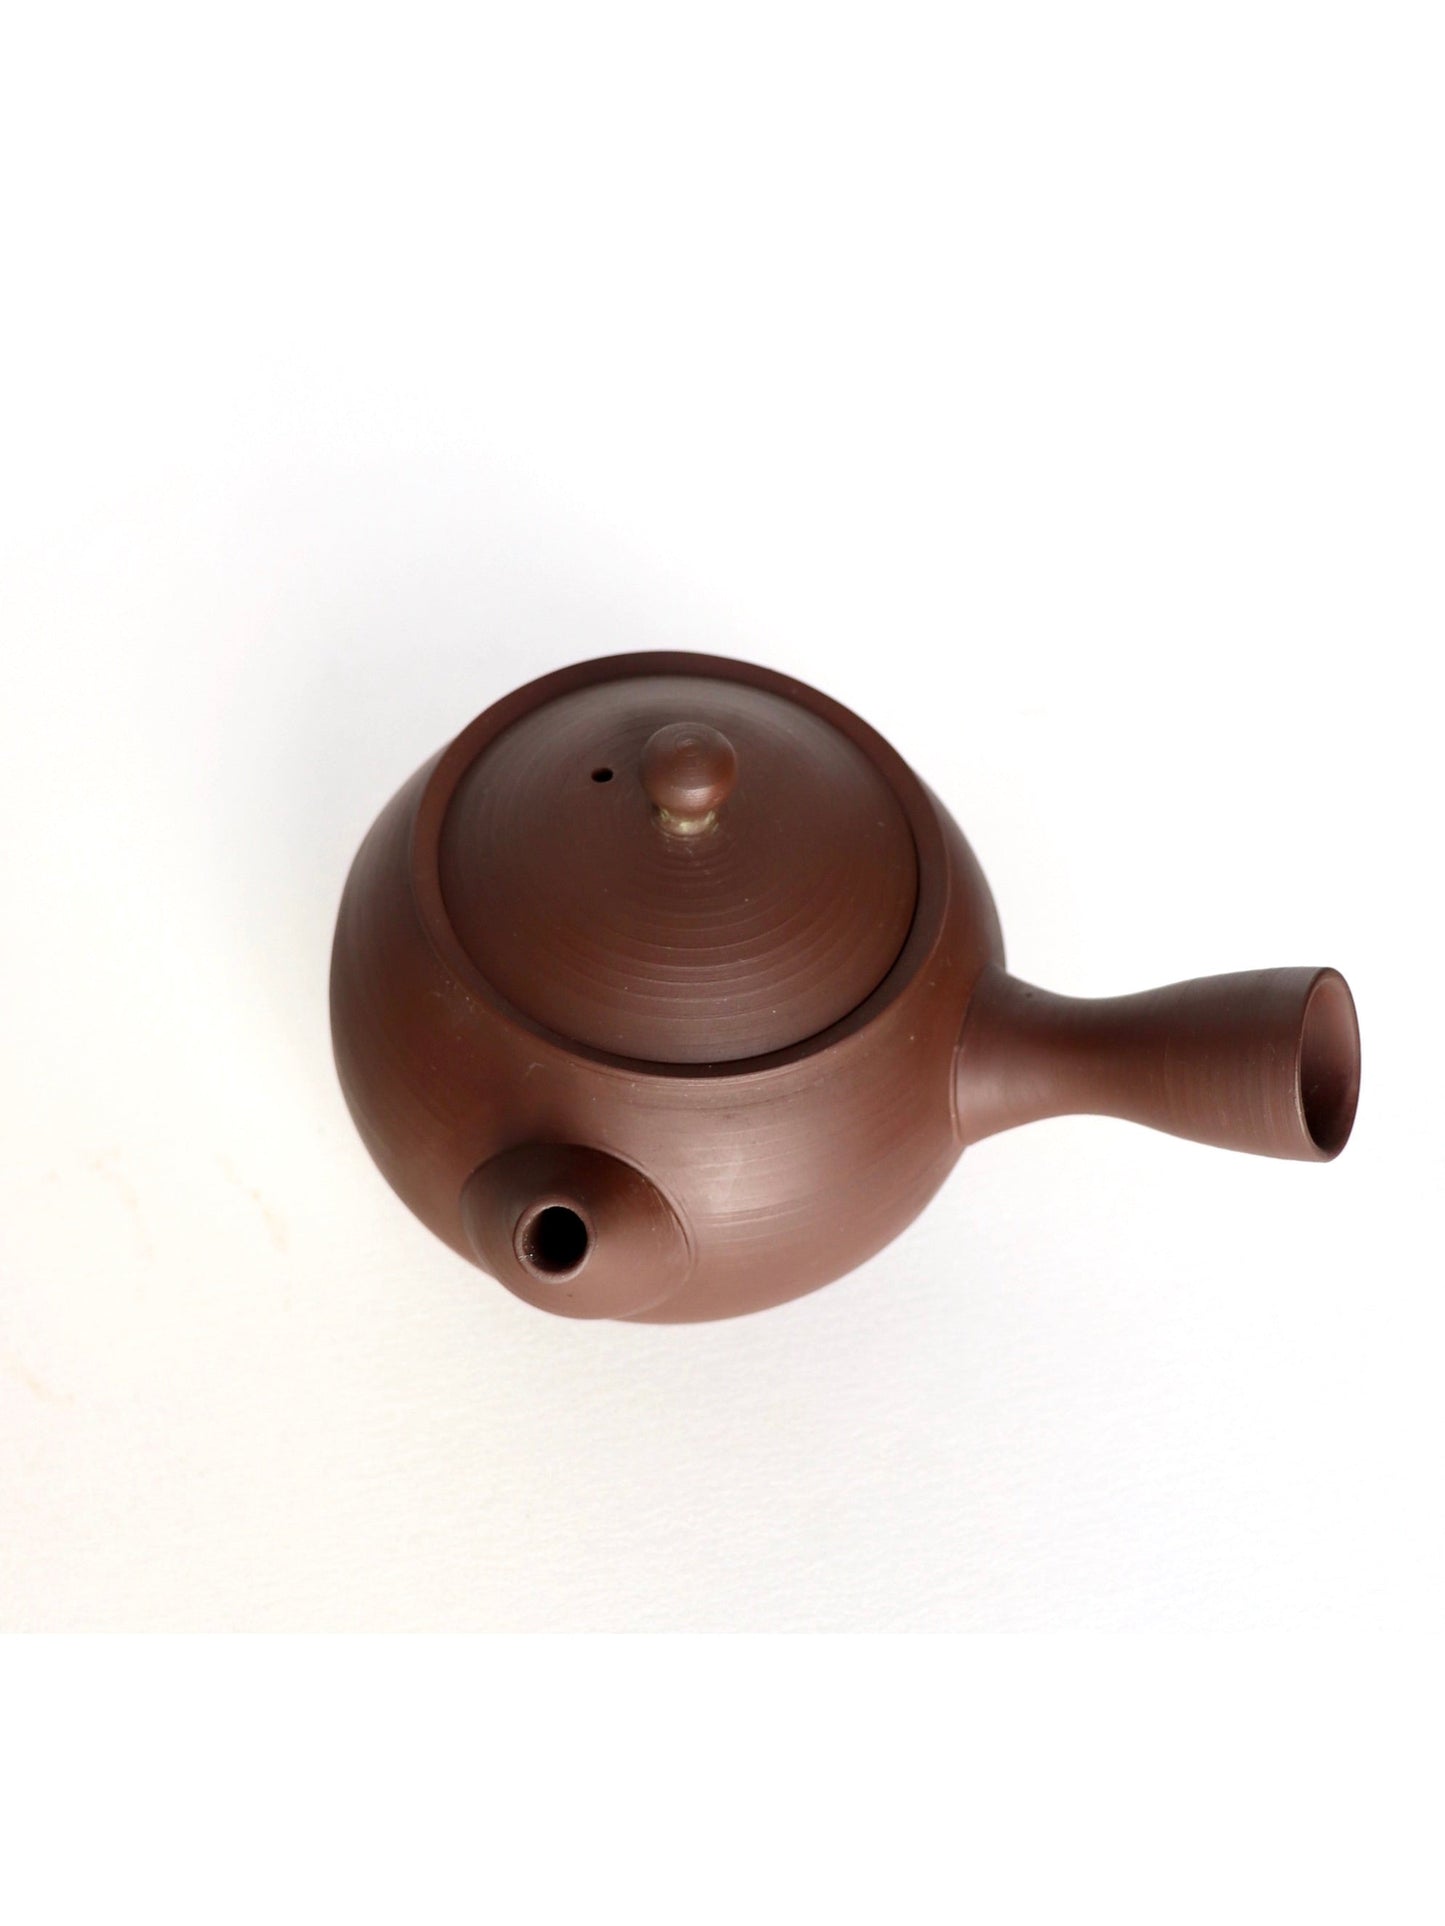 Stoneware kyusu teapot / Tokonamé "Jugetsu" brown